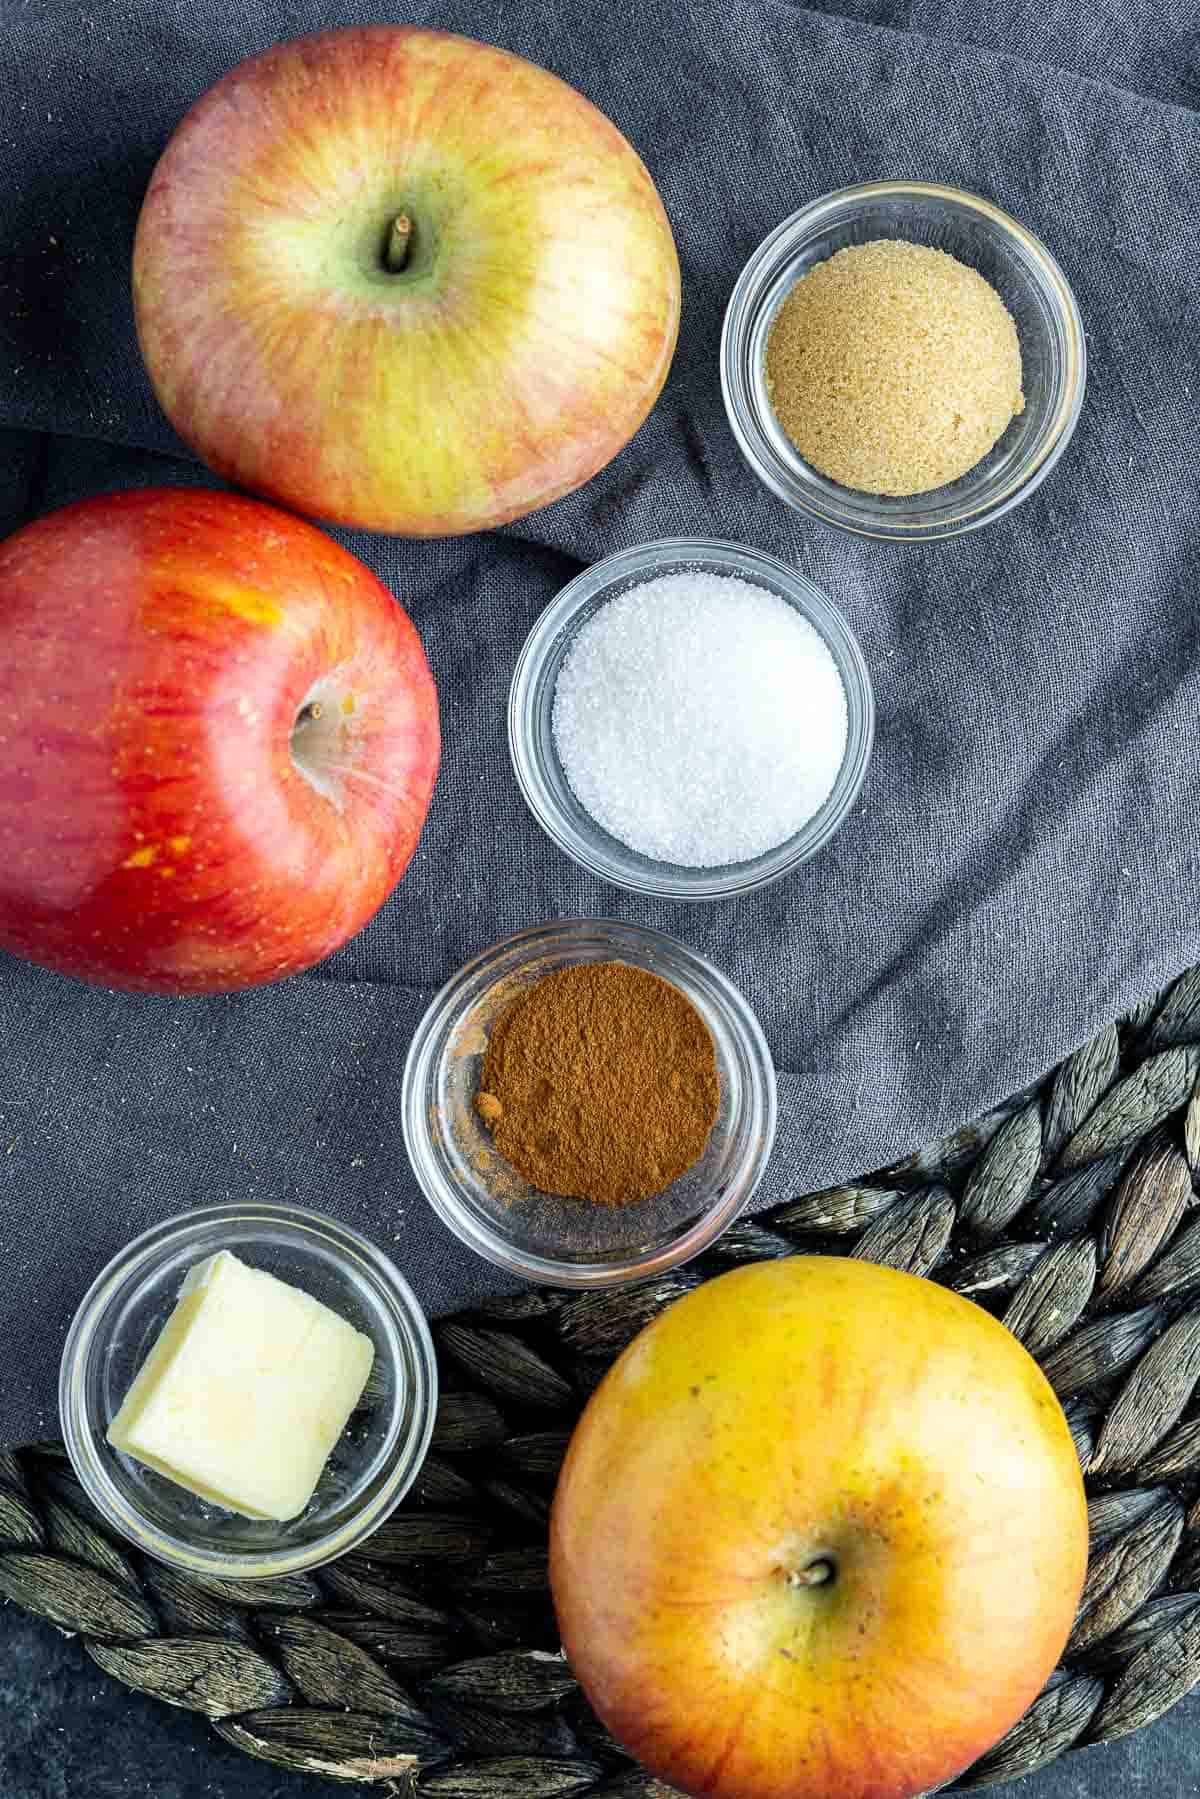 ingredients to make Air Fryer Baked Apple Slices